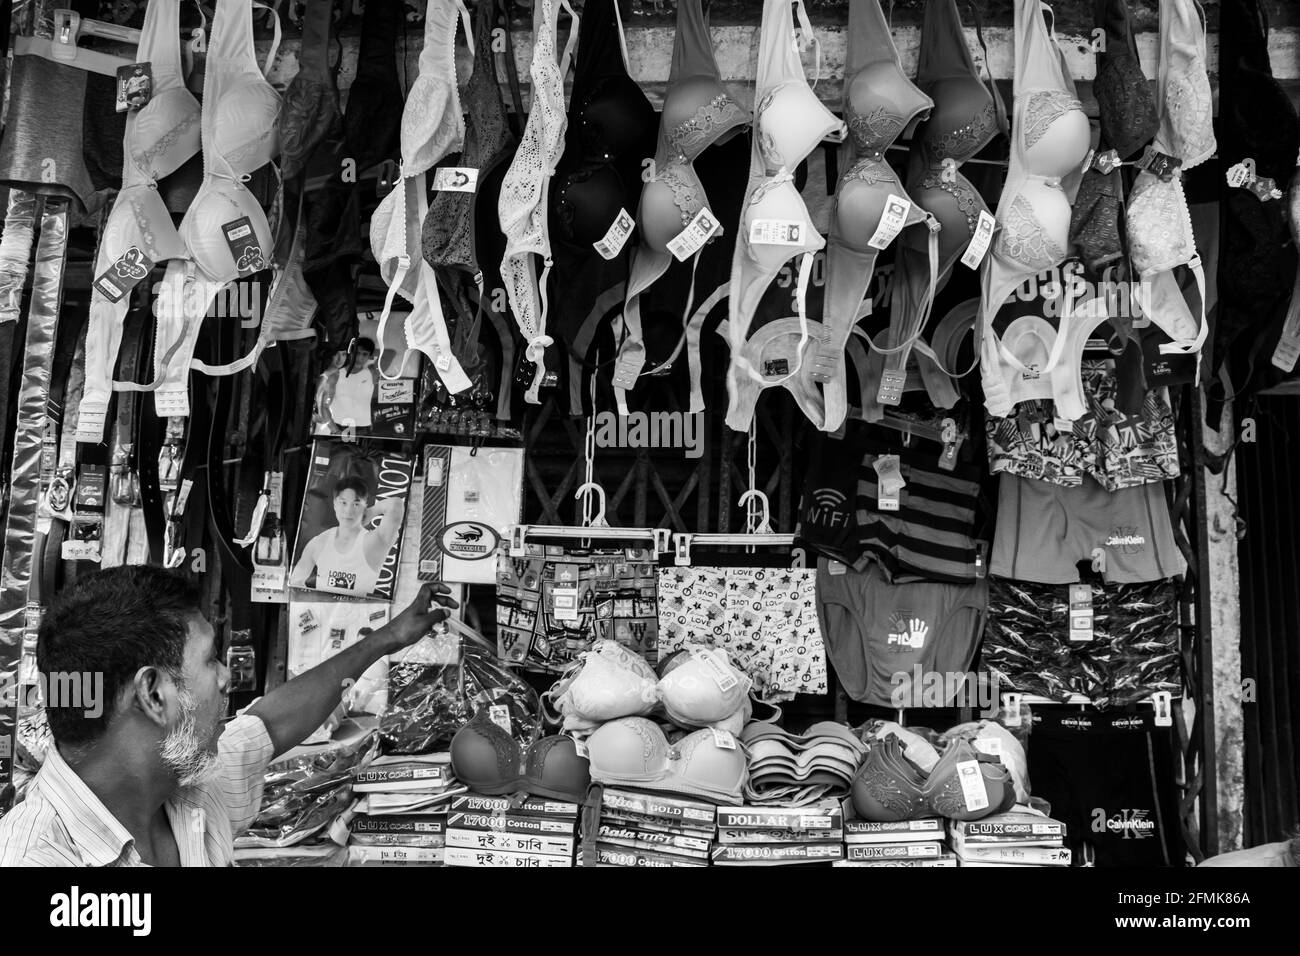 Bra shop display in the market, I captured this image Chak Bazar, Dhaka, Bangladesh, Asia Stock Photo